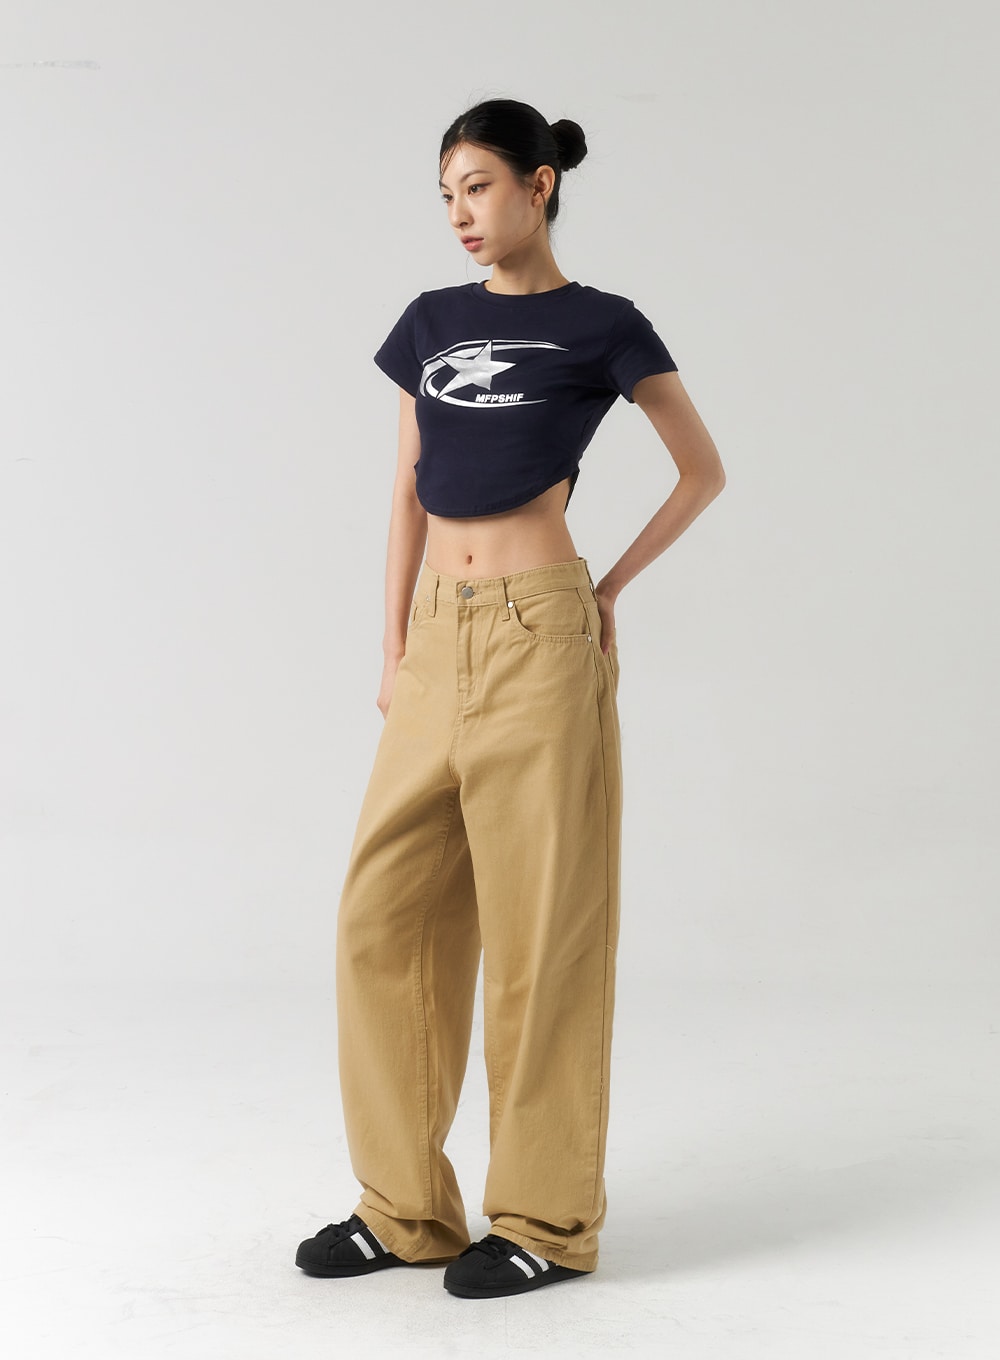 Carhartt Cargo Pants Women - Shop on Pinterest